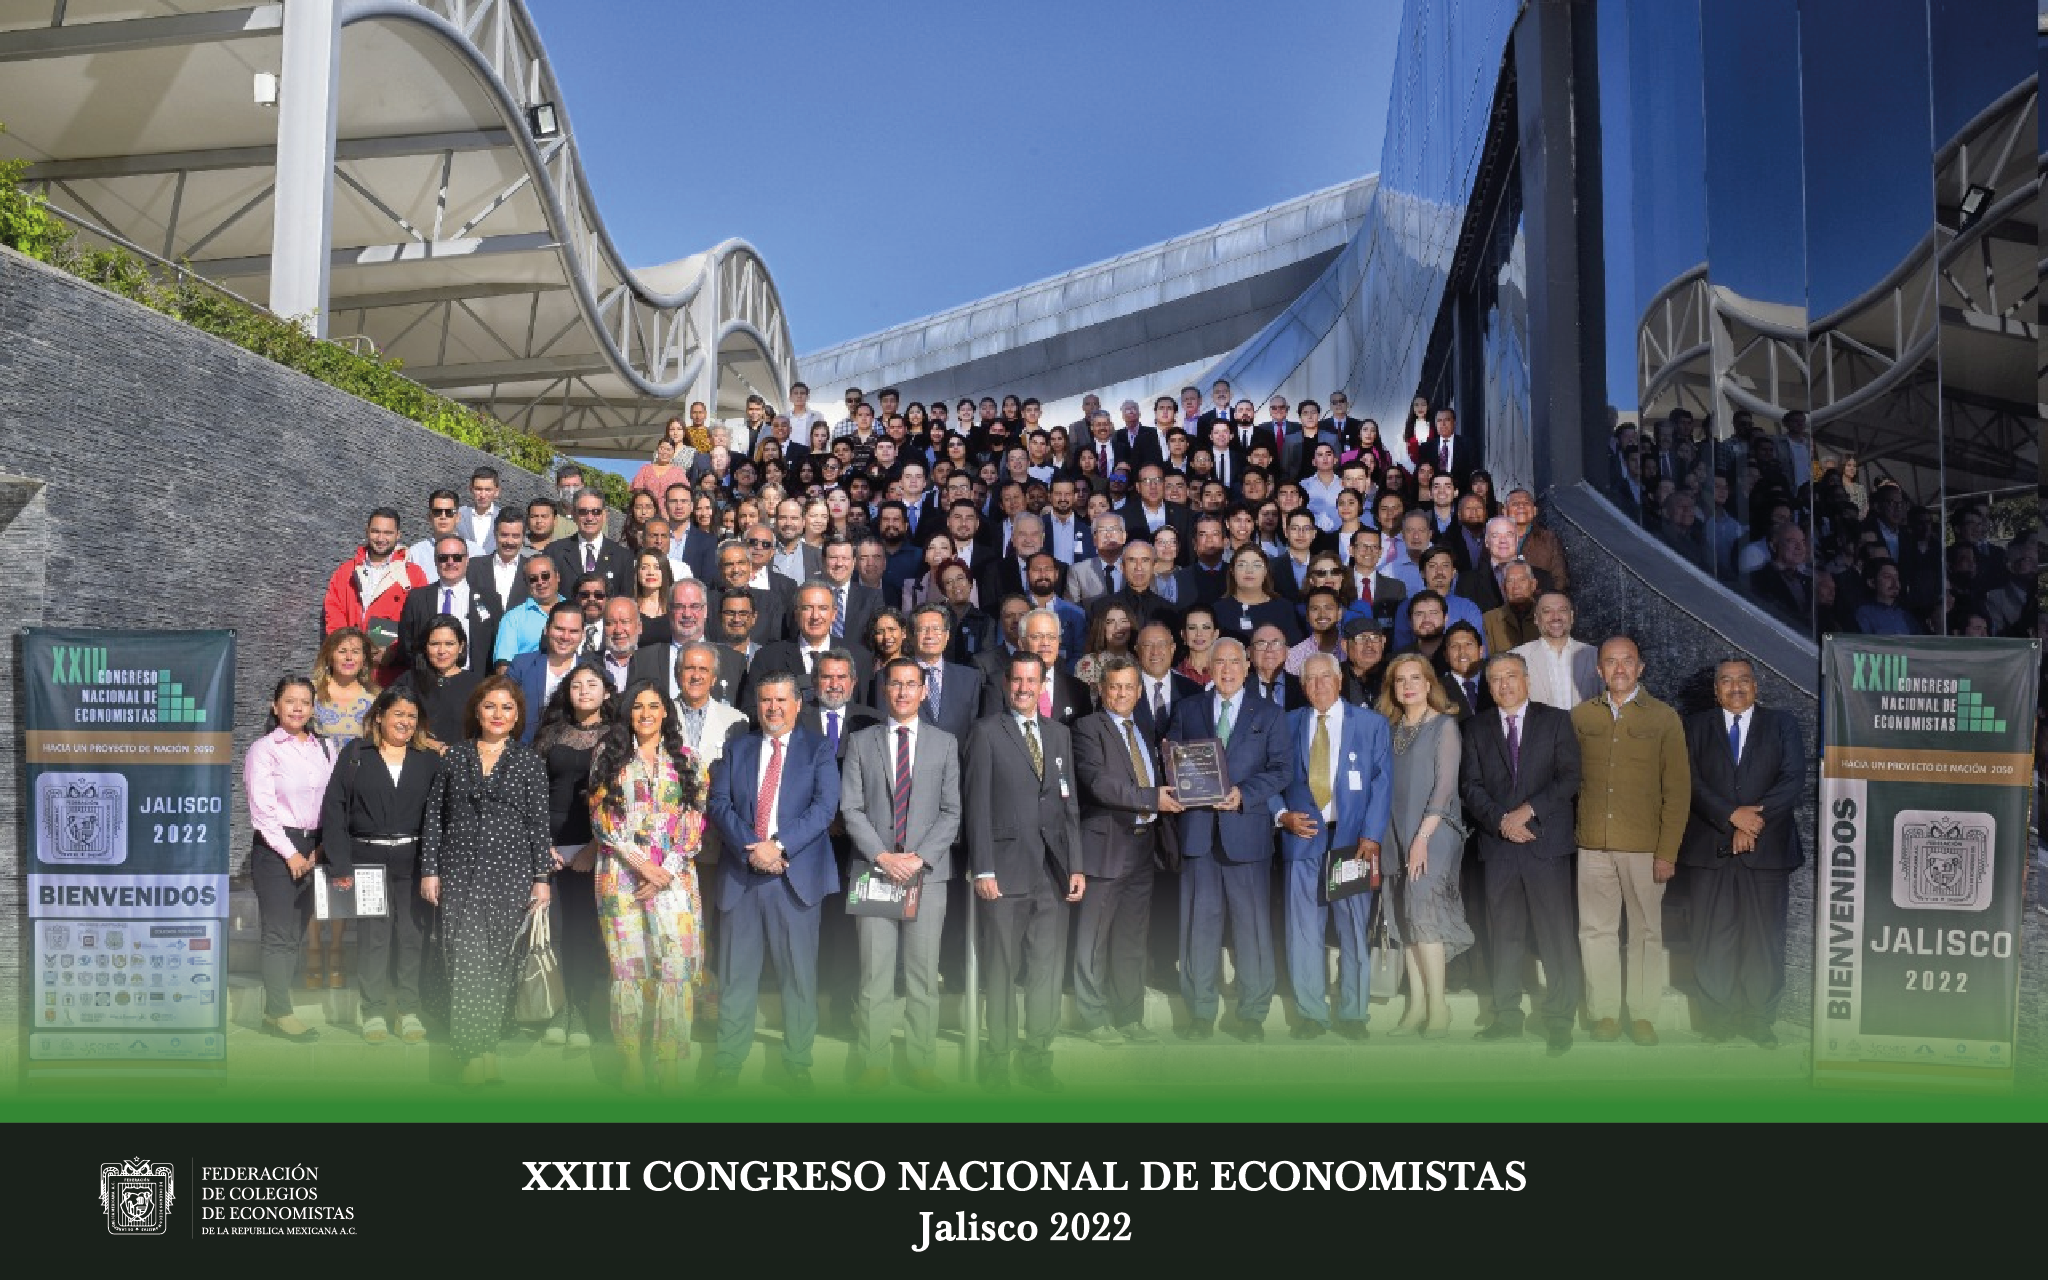 XXIII CONGRESO NACIONAL DE ECONOMISTAS Jalisco 2022